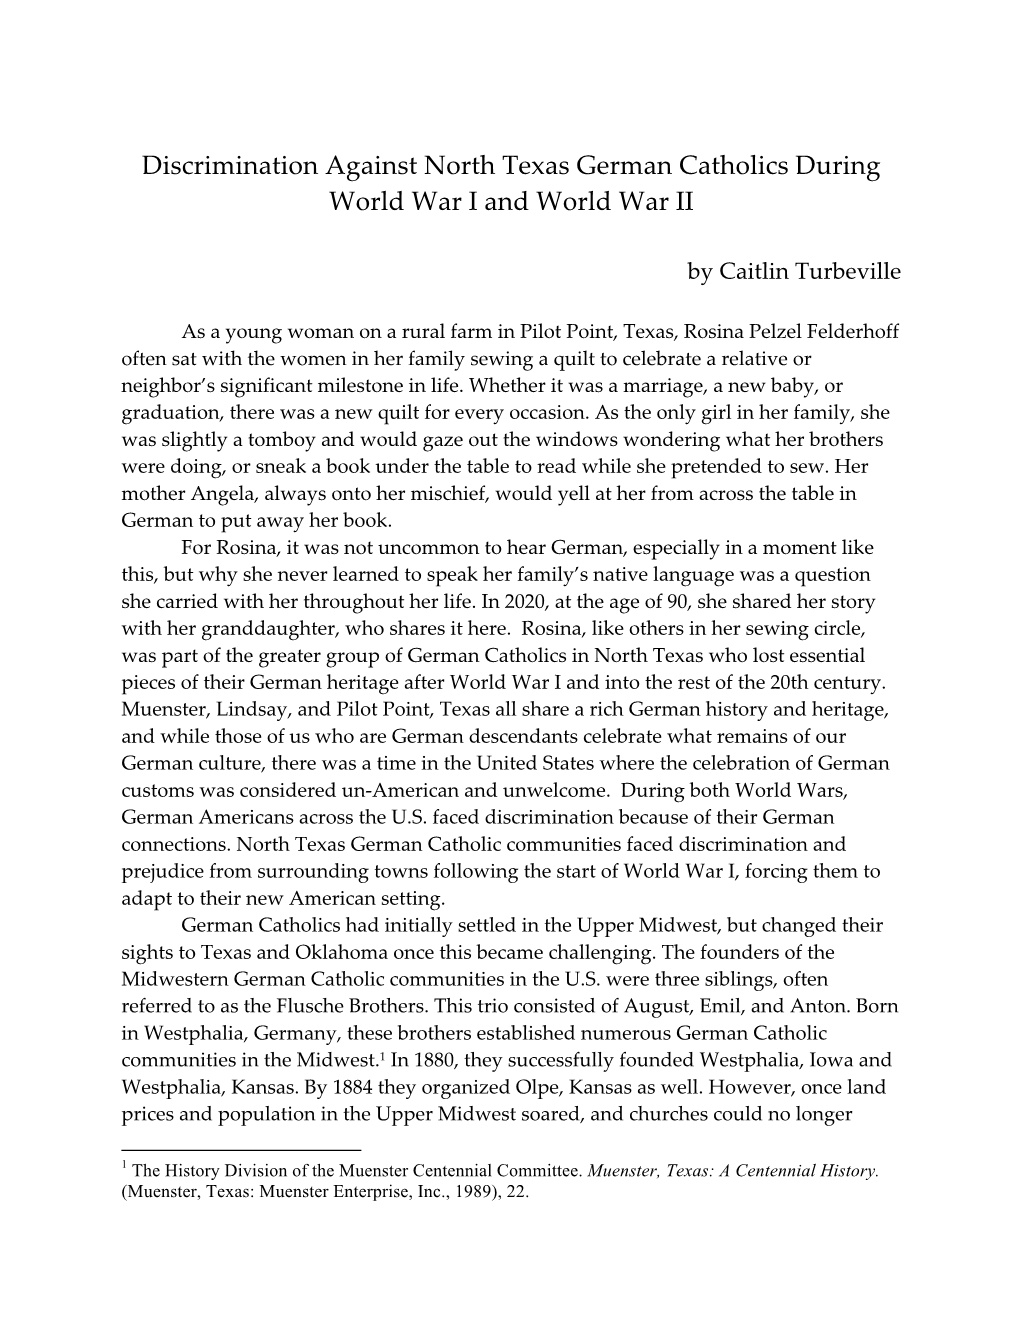 Discrimination Against North Texas German Catholics During World War I and World War II